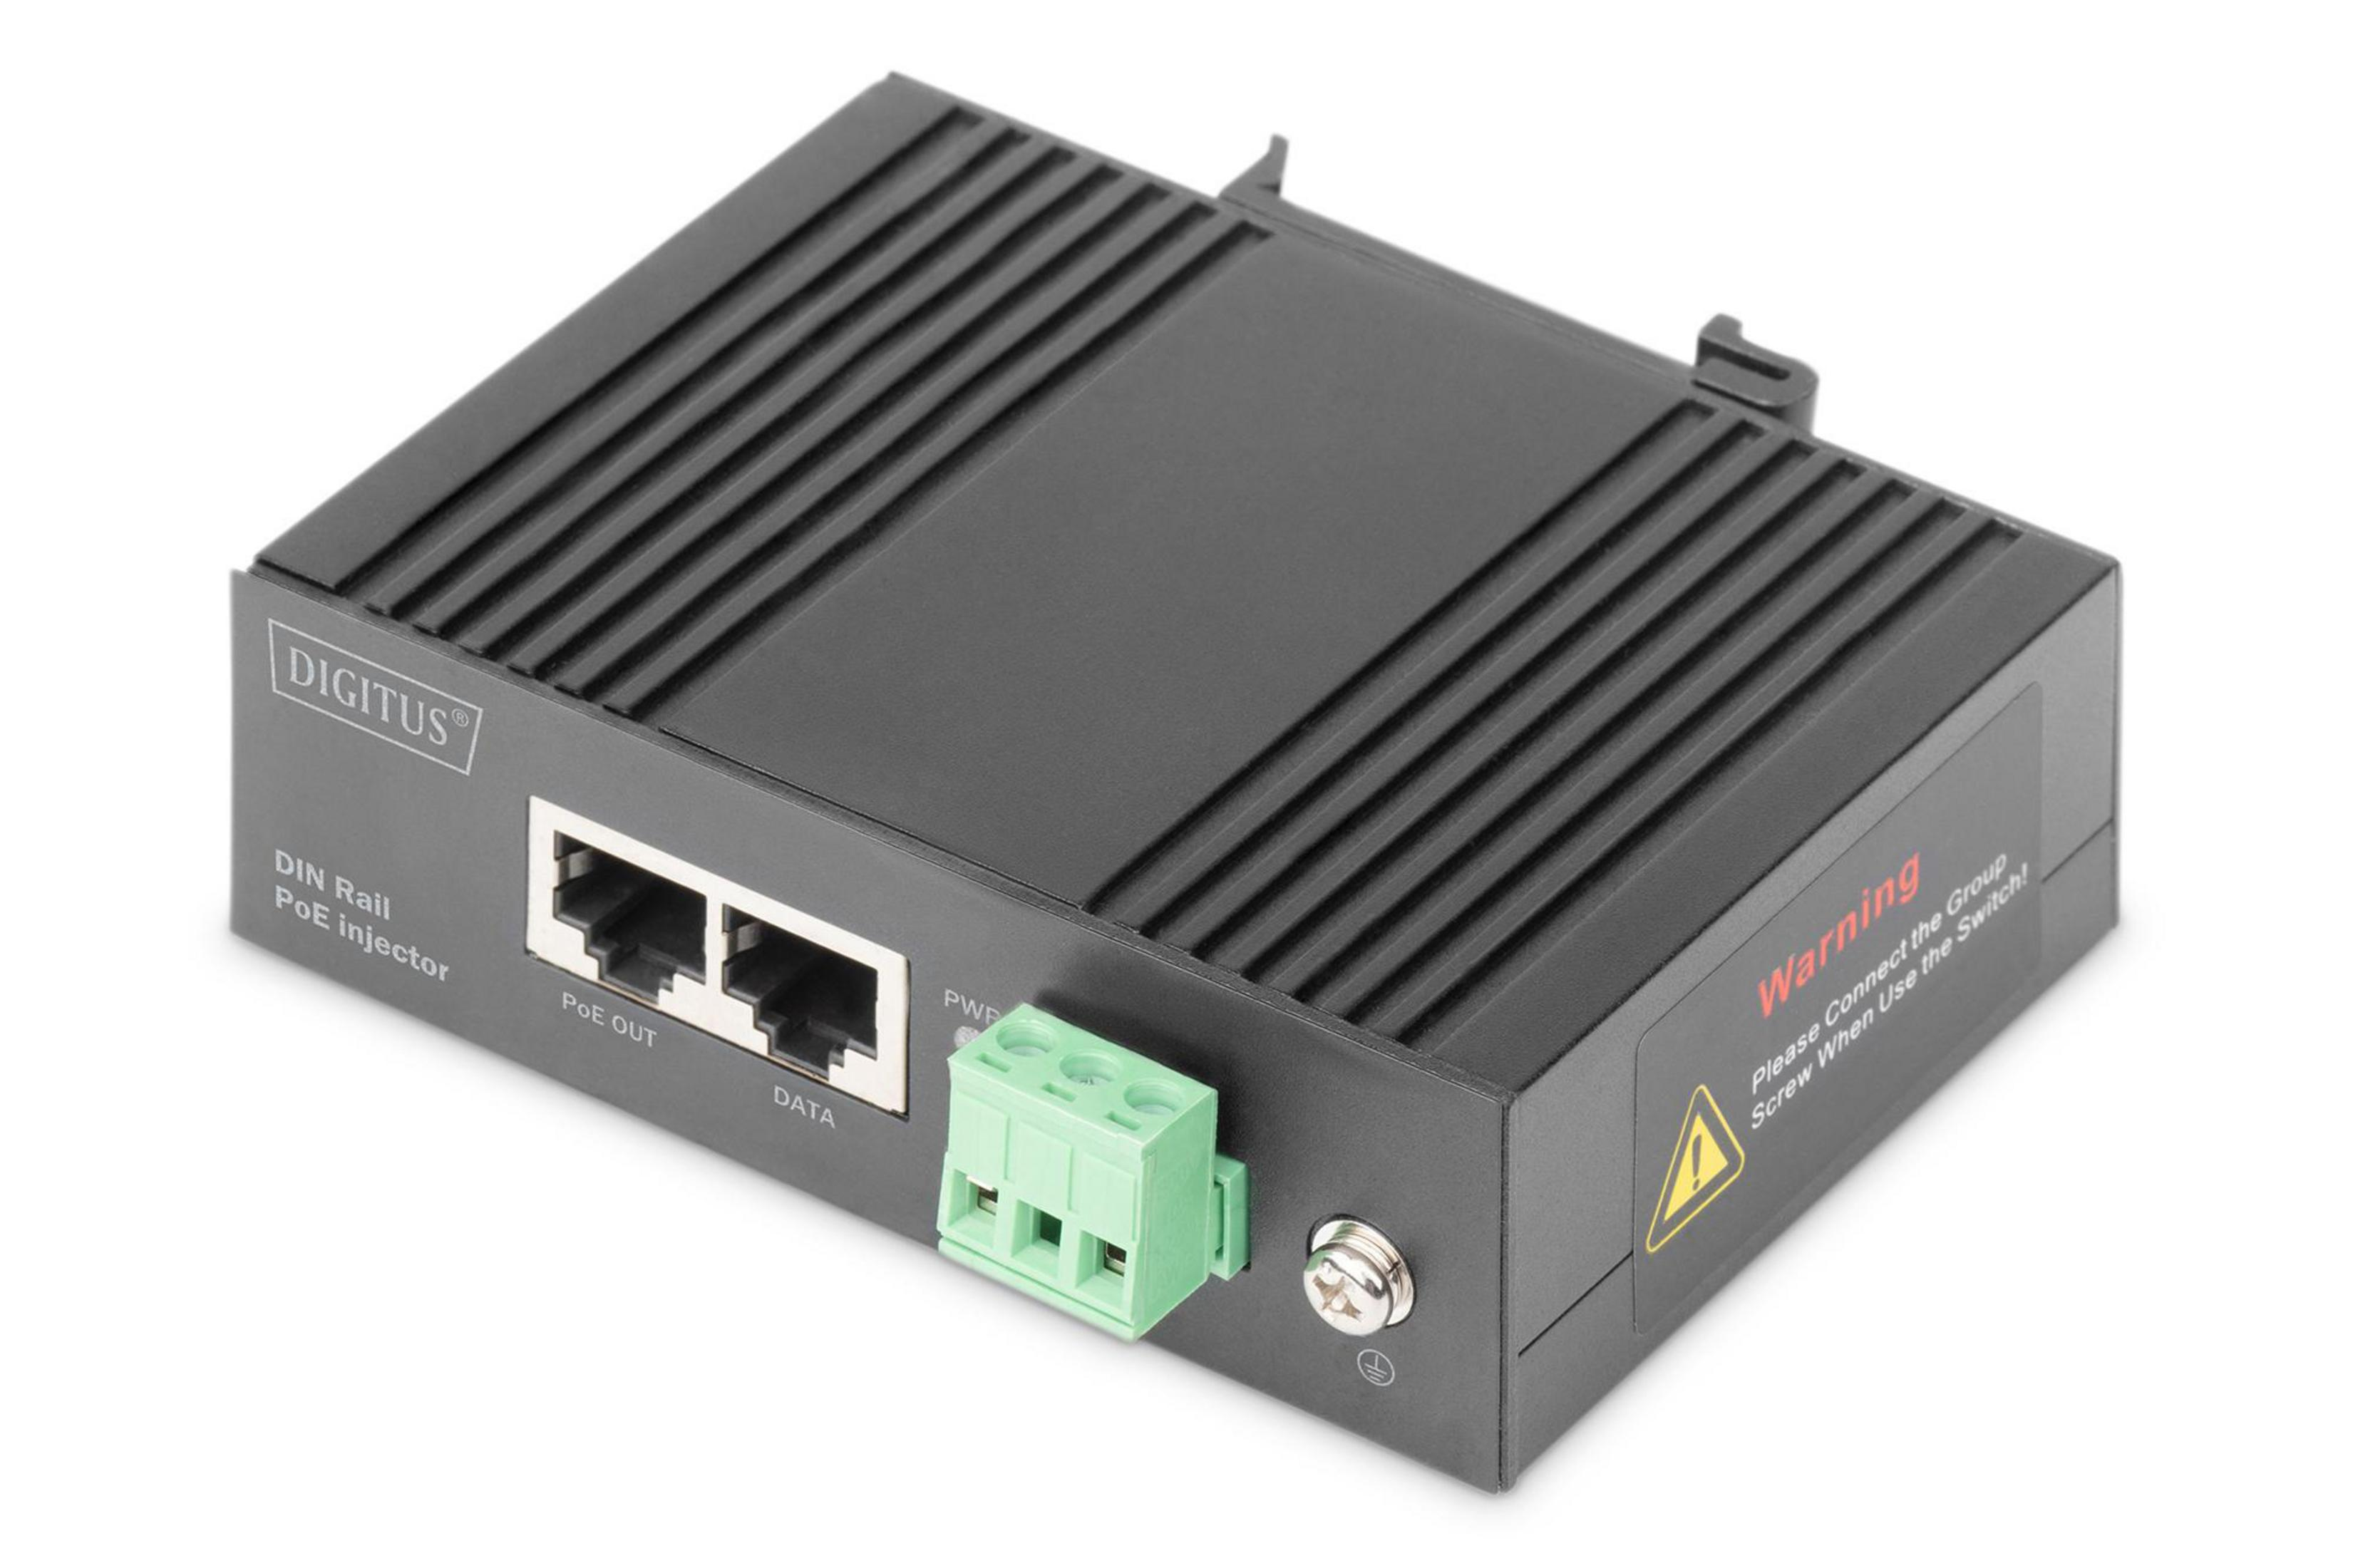 ETHERNET GB Ethernet PoE+ Gigabit DIGITUS W, INJEKTOR 30 Injektor DN-651114 POE+